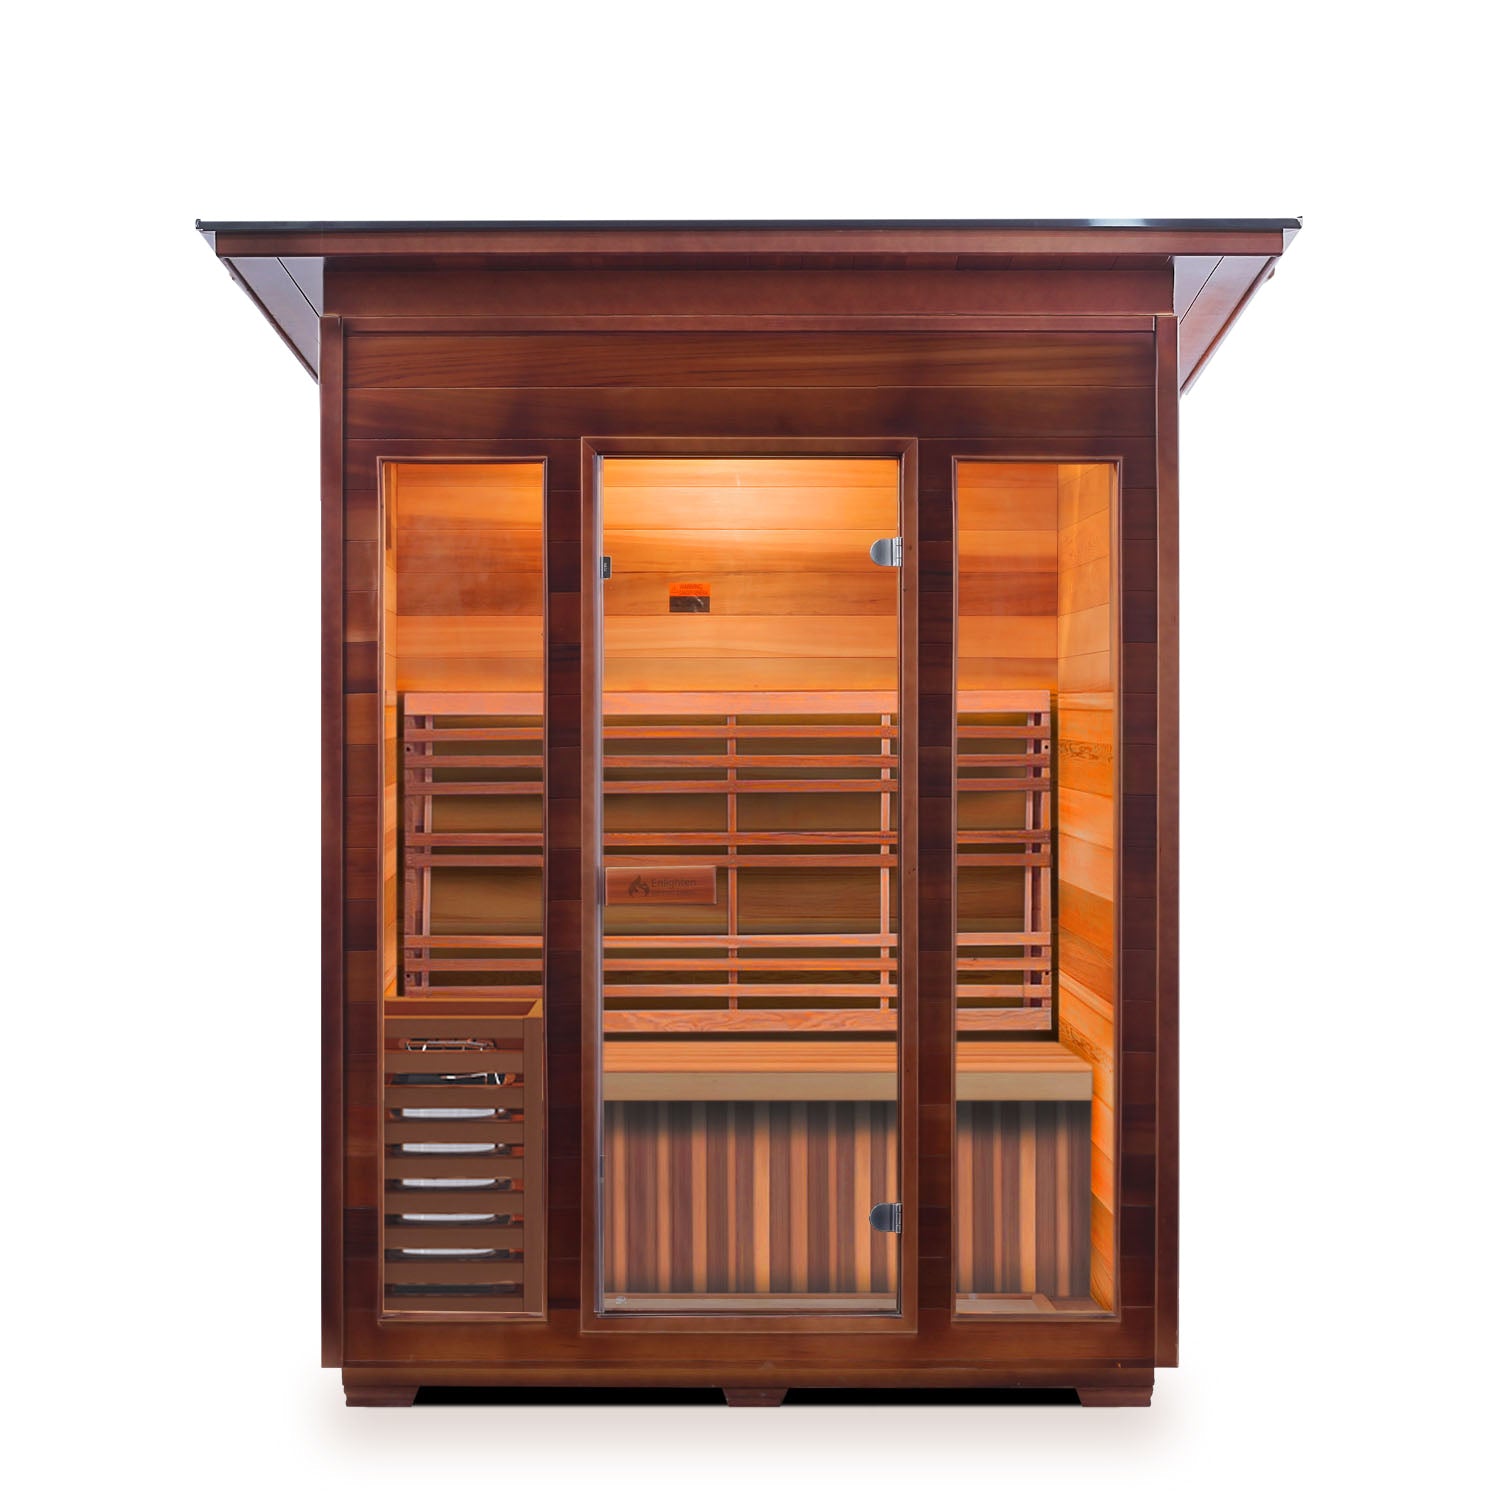 Enlighten sauna SaunaTerra Dry Traditional SunRise 3 Person Canadian Red Cedar Wood Indoor roofed with glass door and windows front view